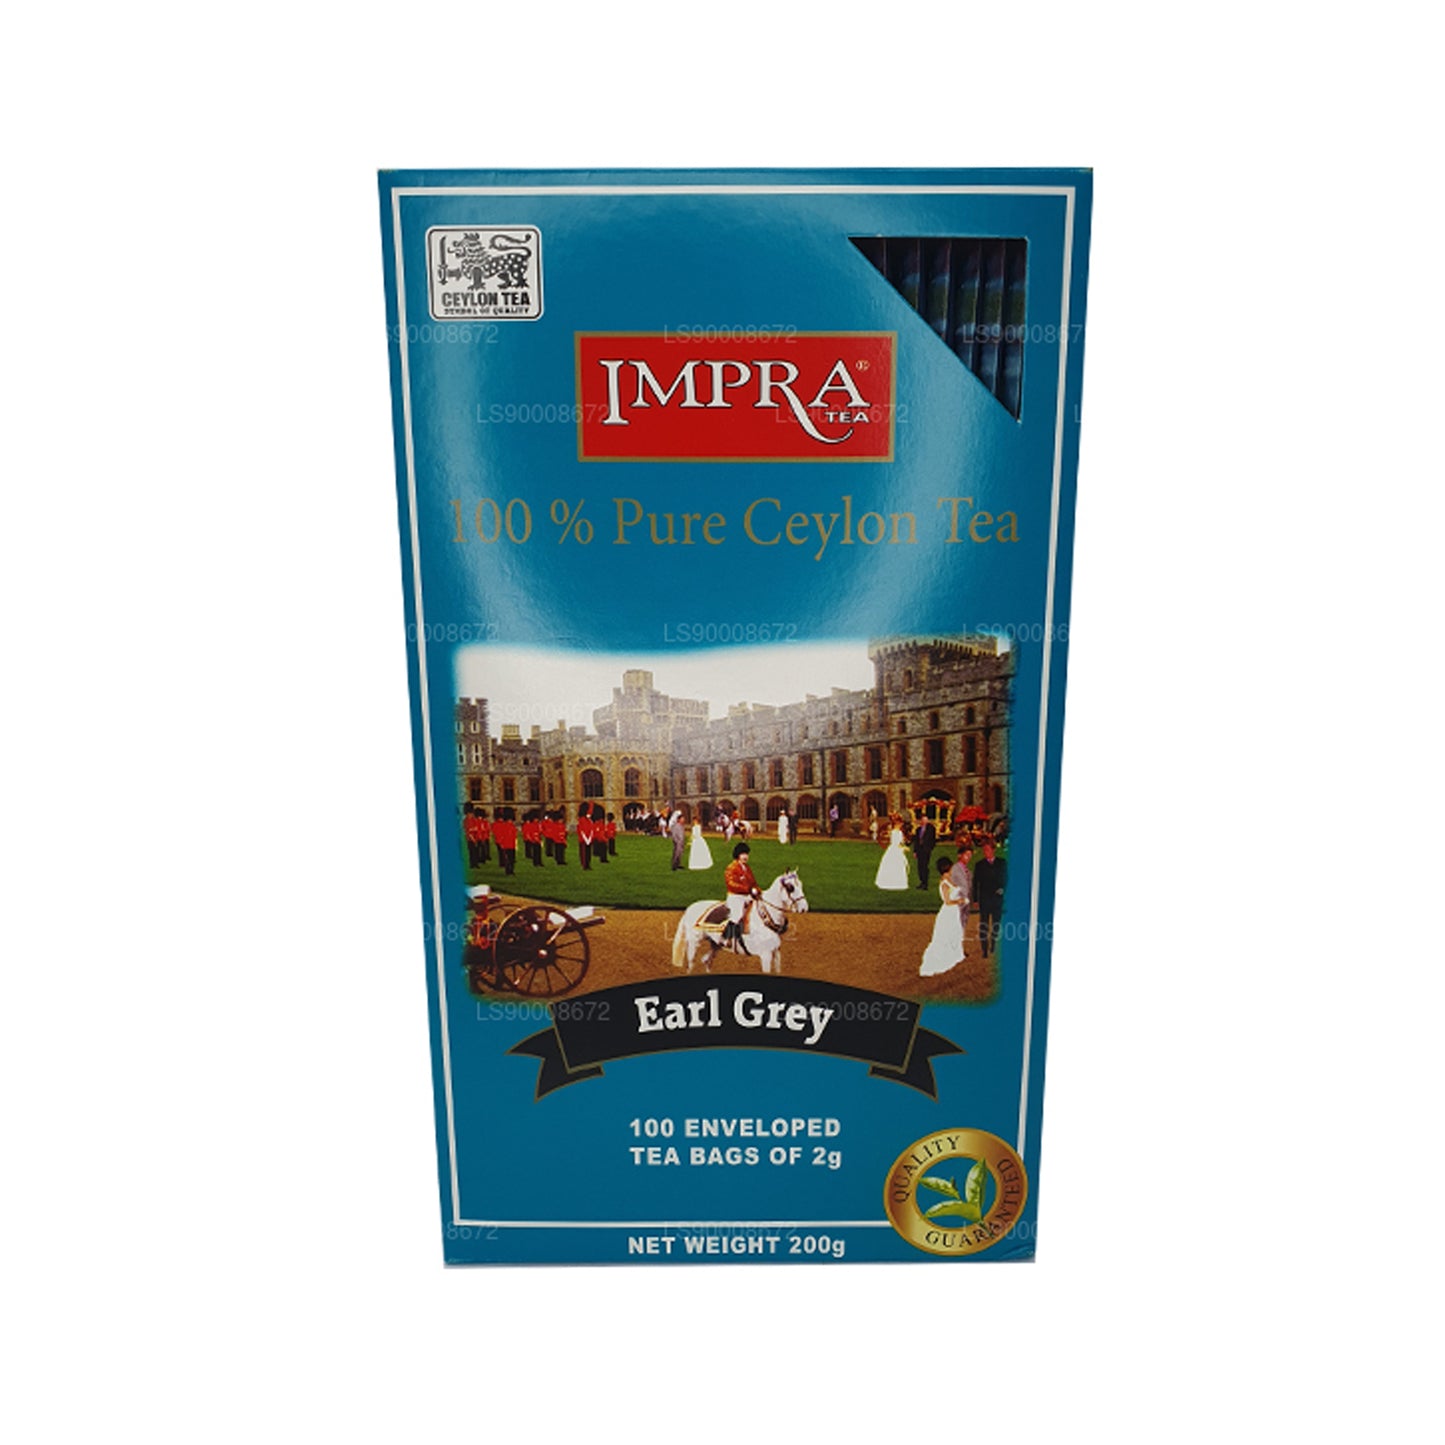 Impra Earl Grey (200g) 100 Enveloped Tea Bags